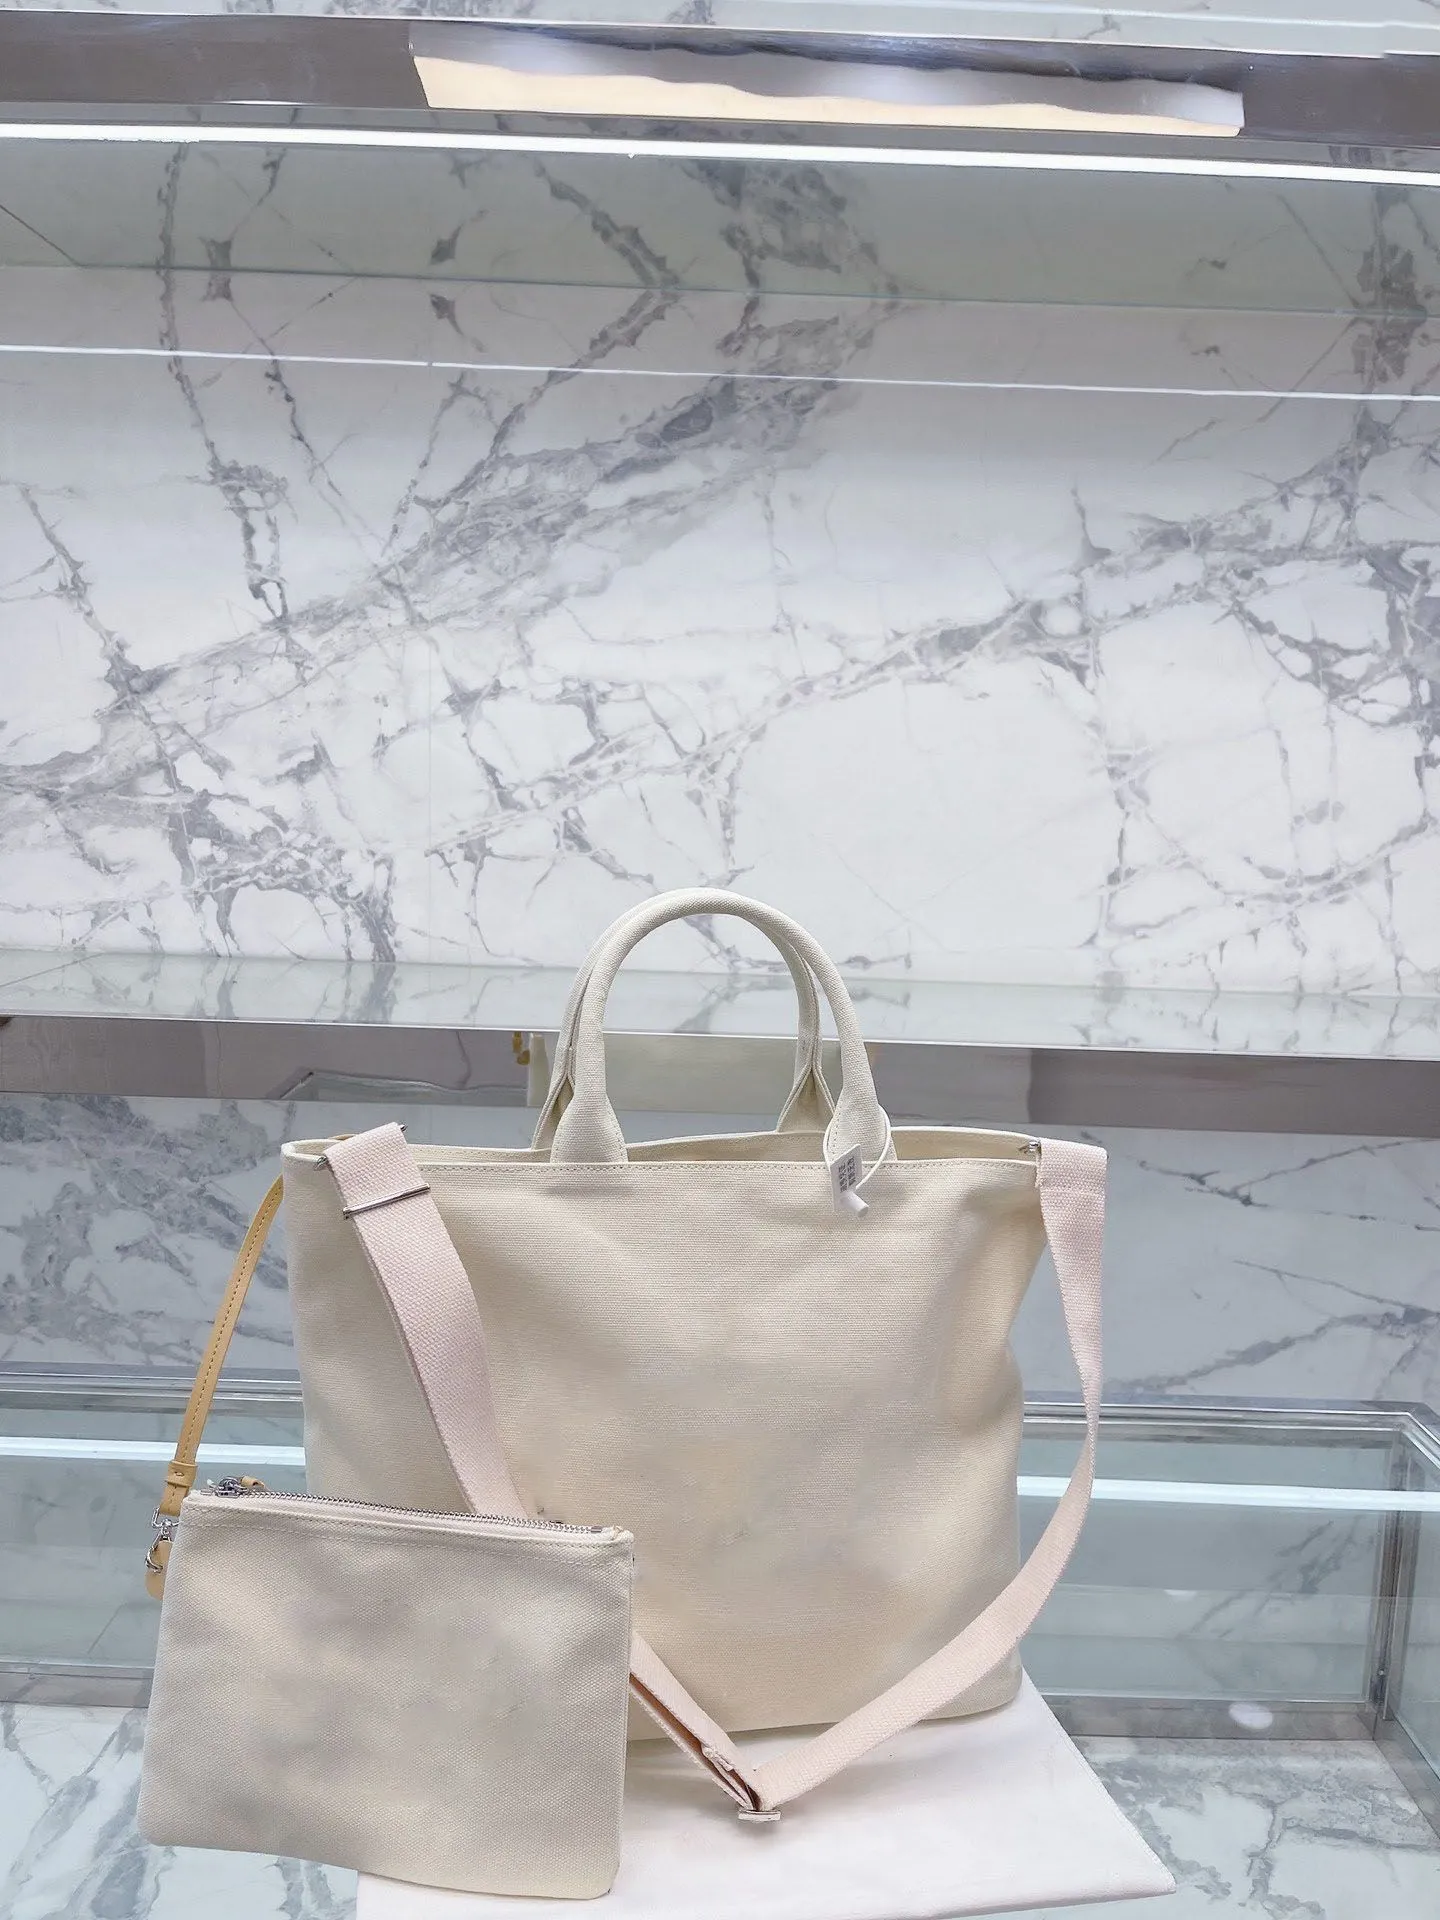 Large capacity volume Shopping Bag Winter luxury designer Tote bag women handbag crossbody fashion with nylon